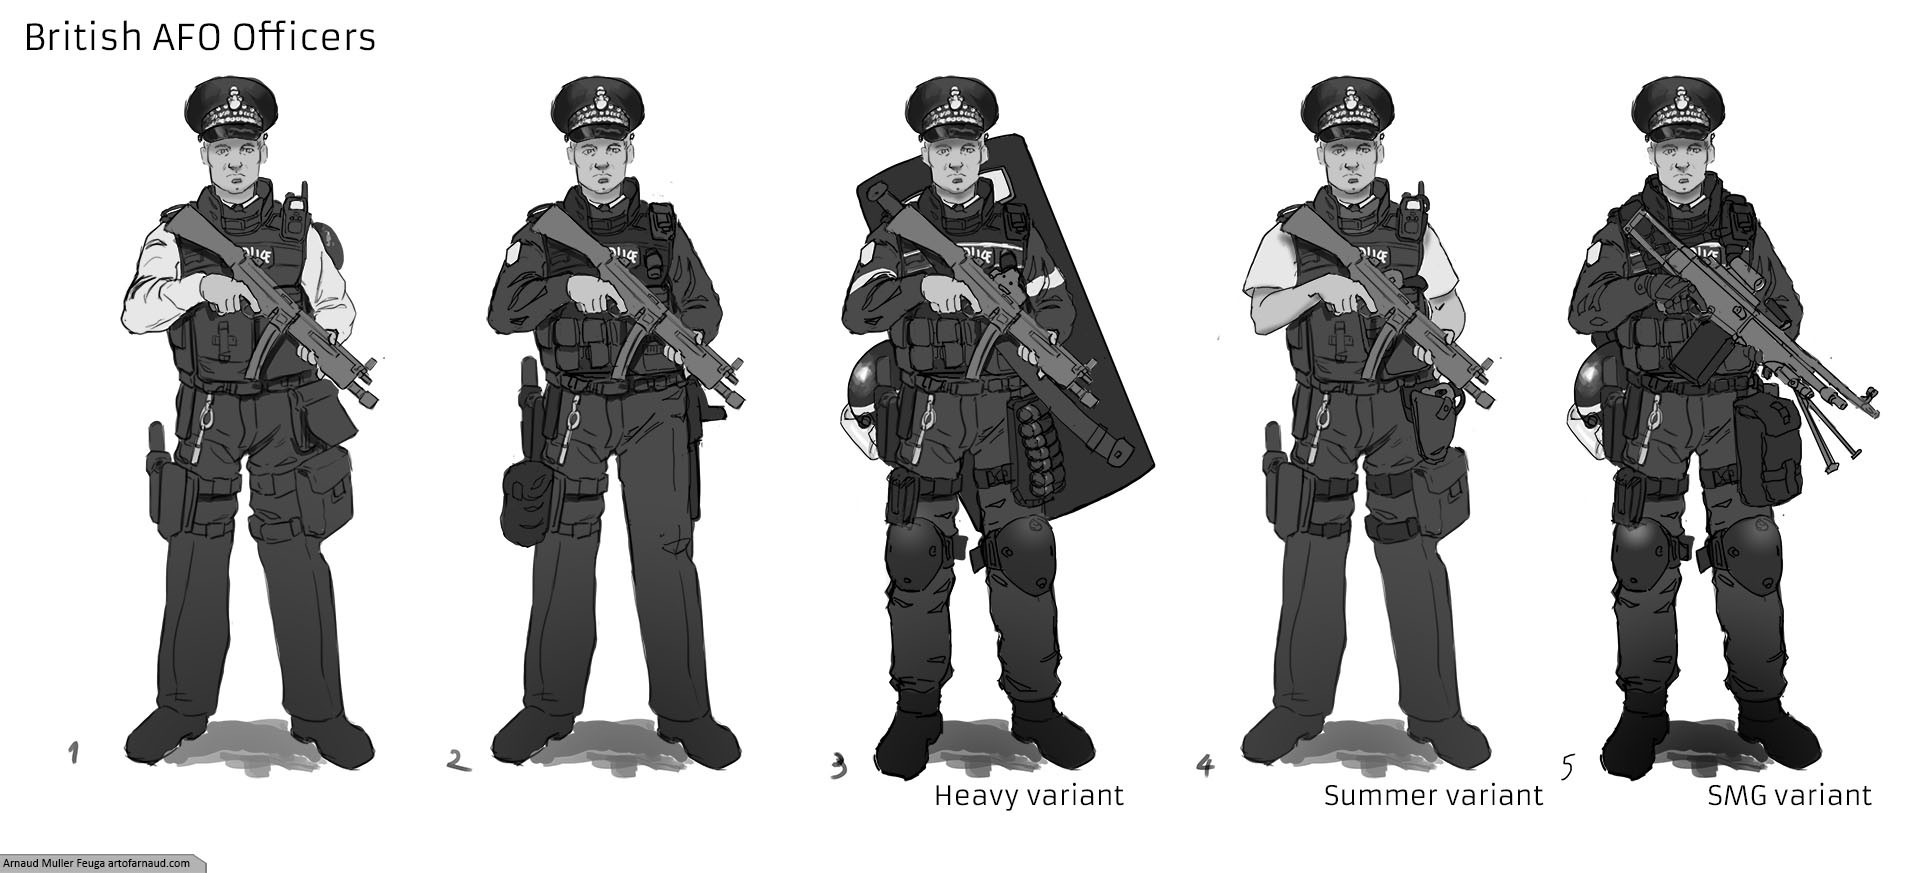 arnaud-muller-feuga-uk-afo-officers-chars-lineup.jpg